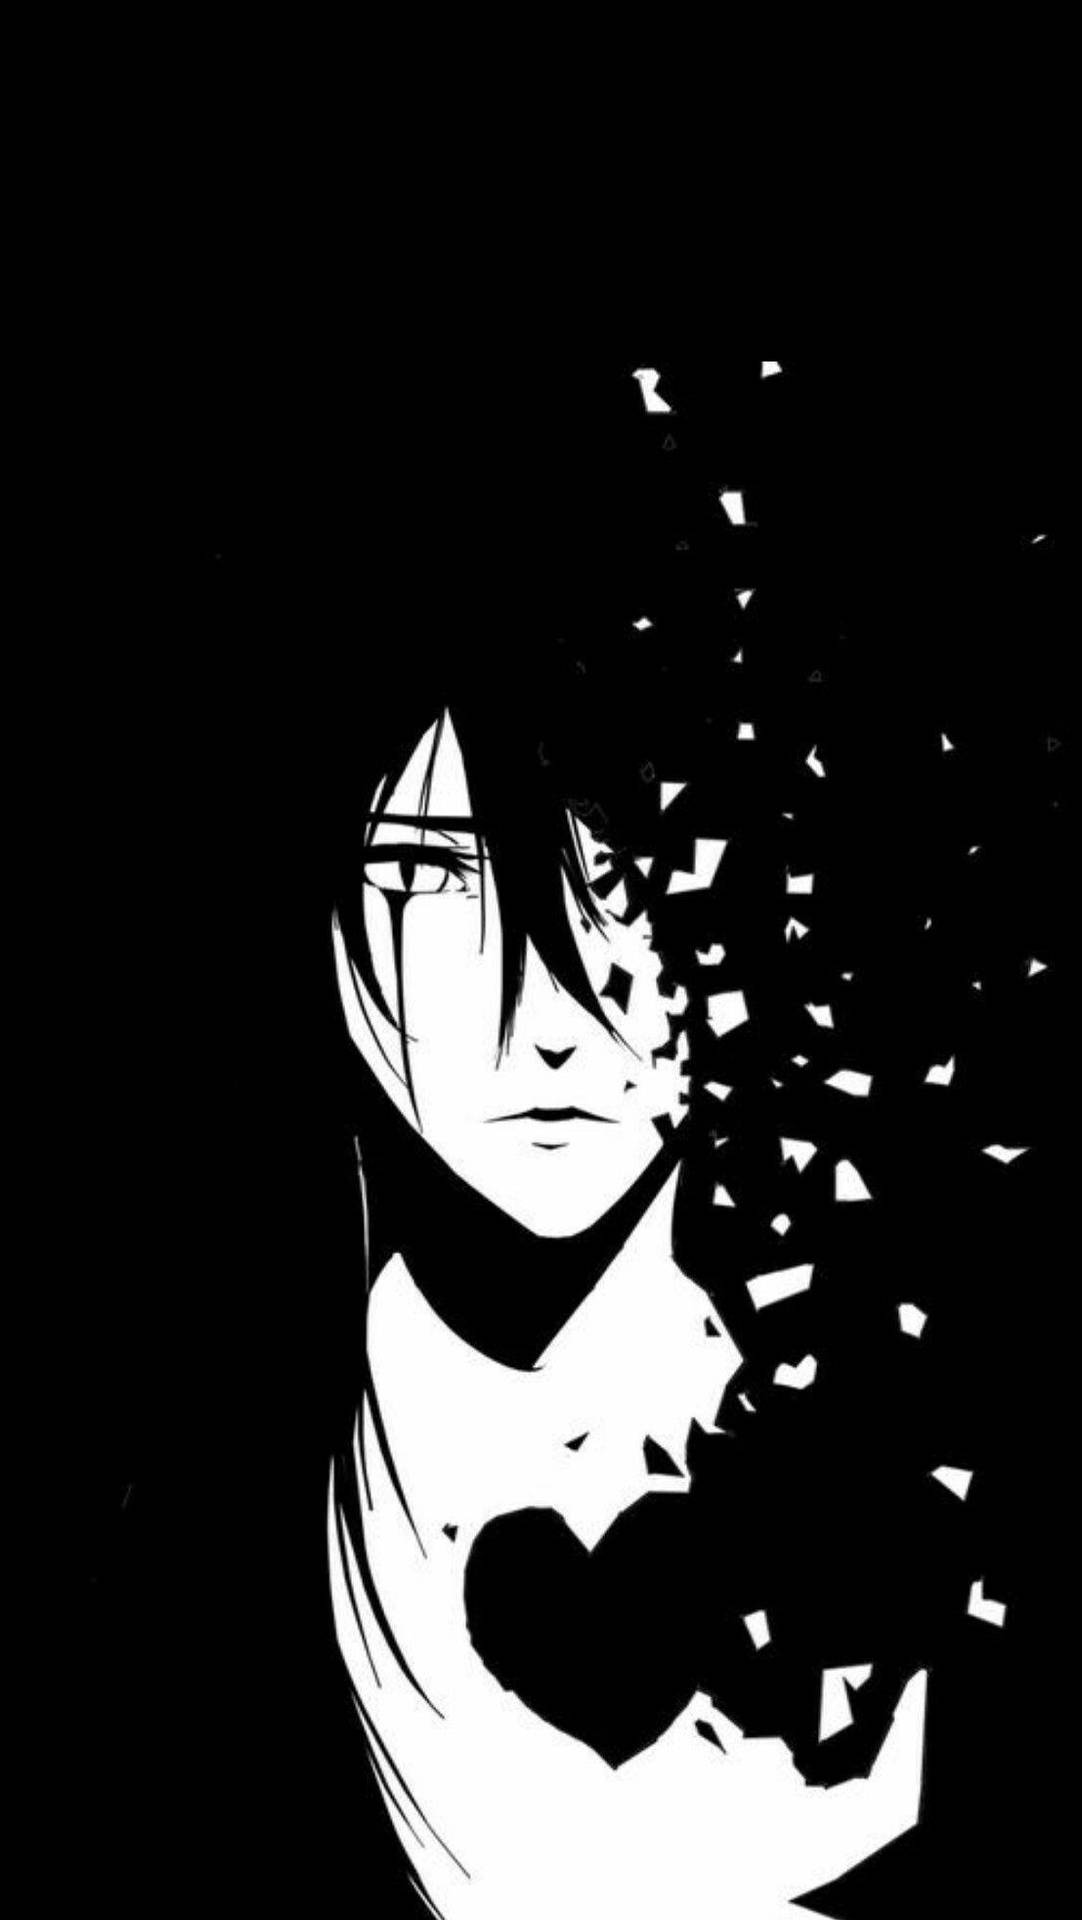 Heartbroken Boy Anime Black And White iPhone Wallpaper